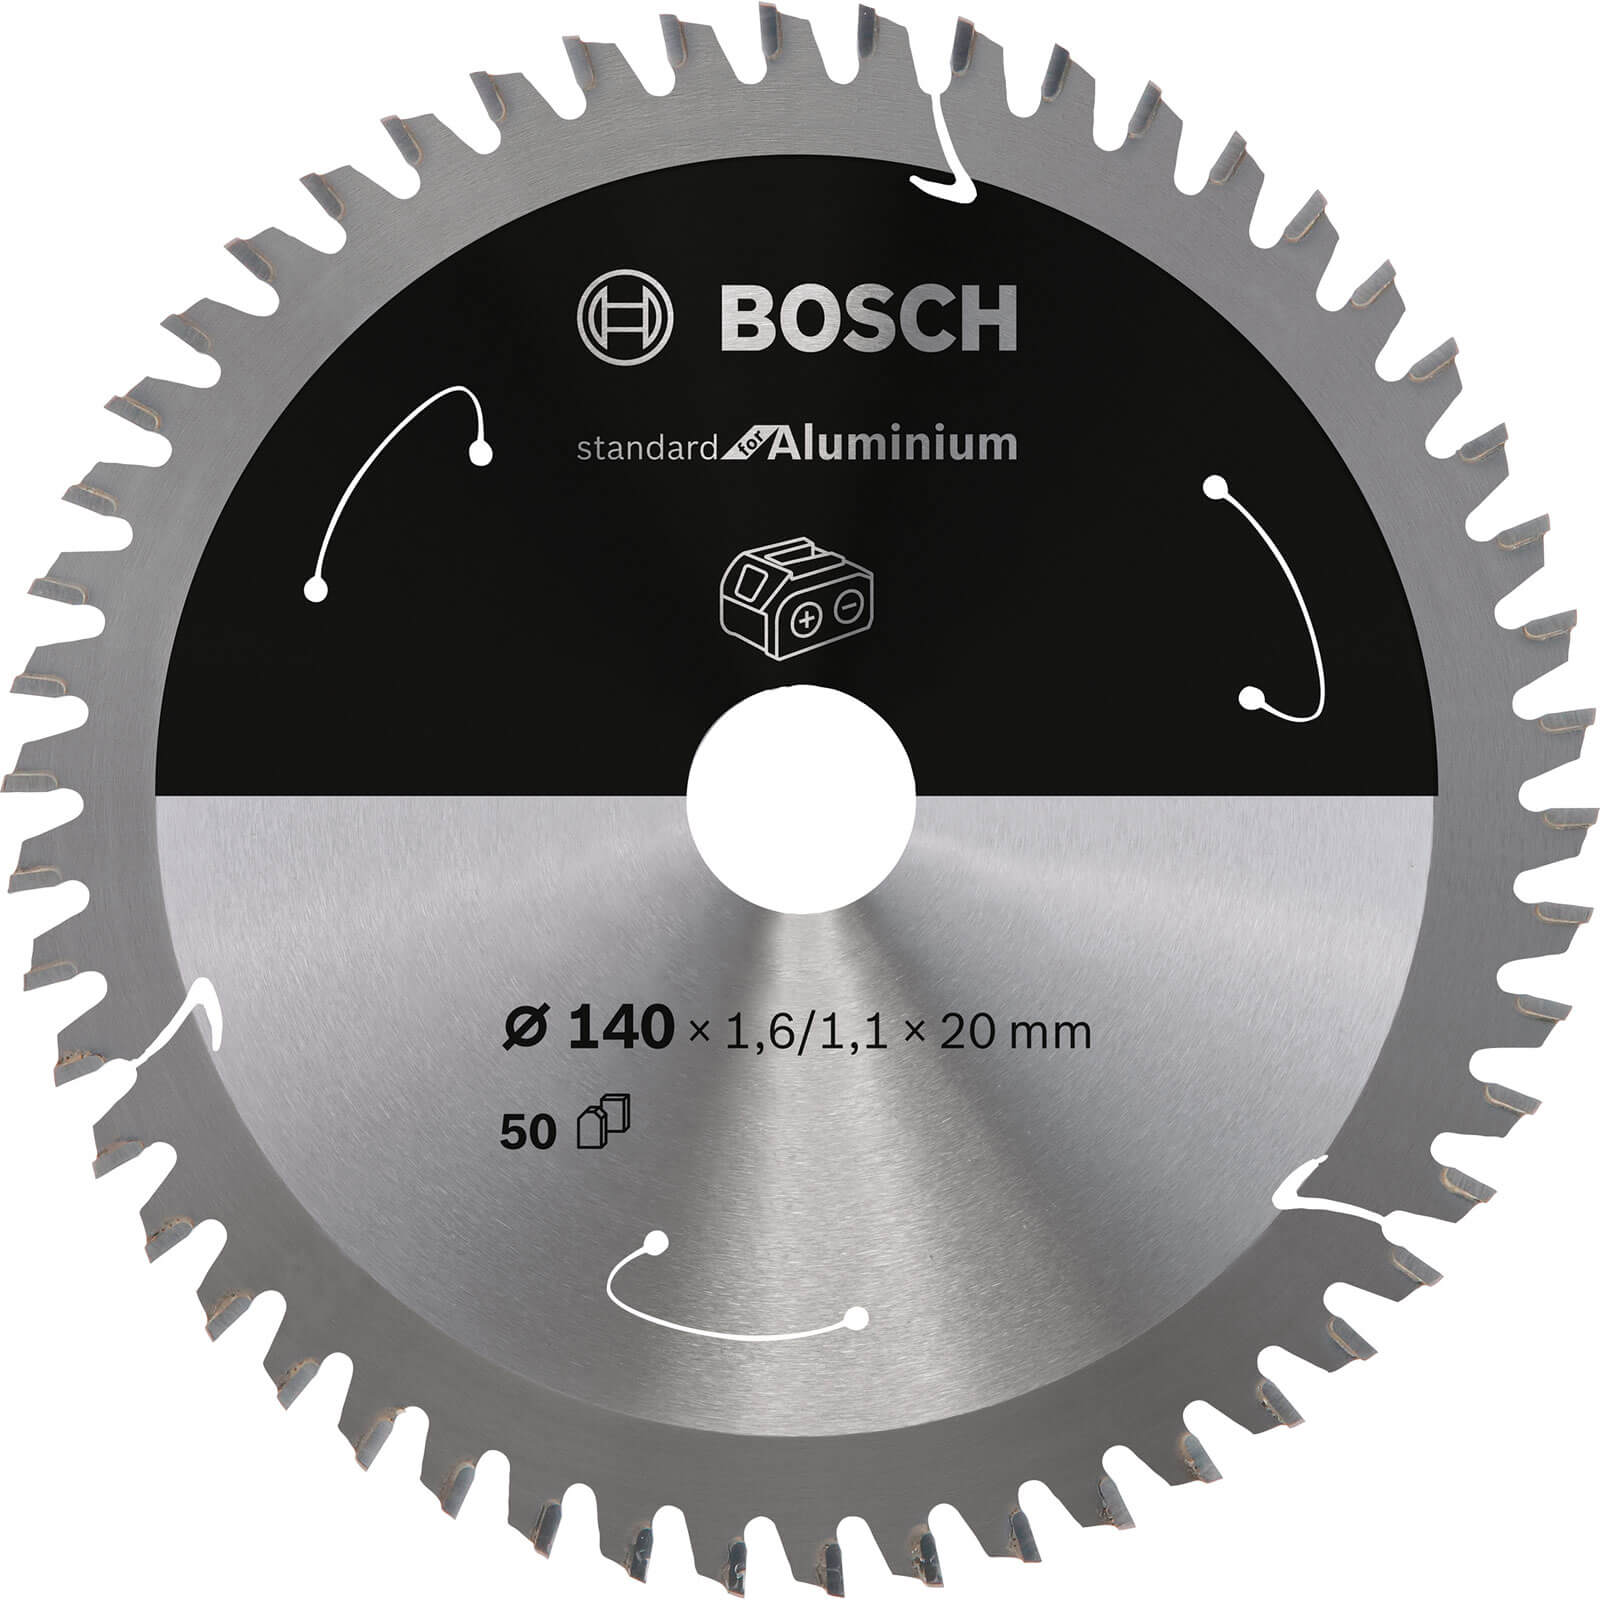 Photos - Power Tool Accessory Bosch Cordless Circular Saw Blade for Aluminium 140mm 50T 20mm 2608837755 